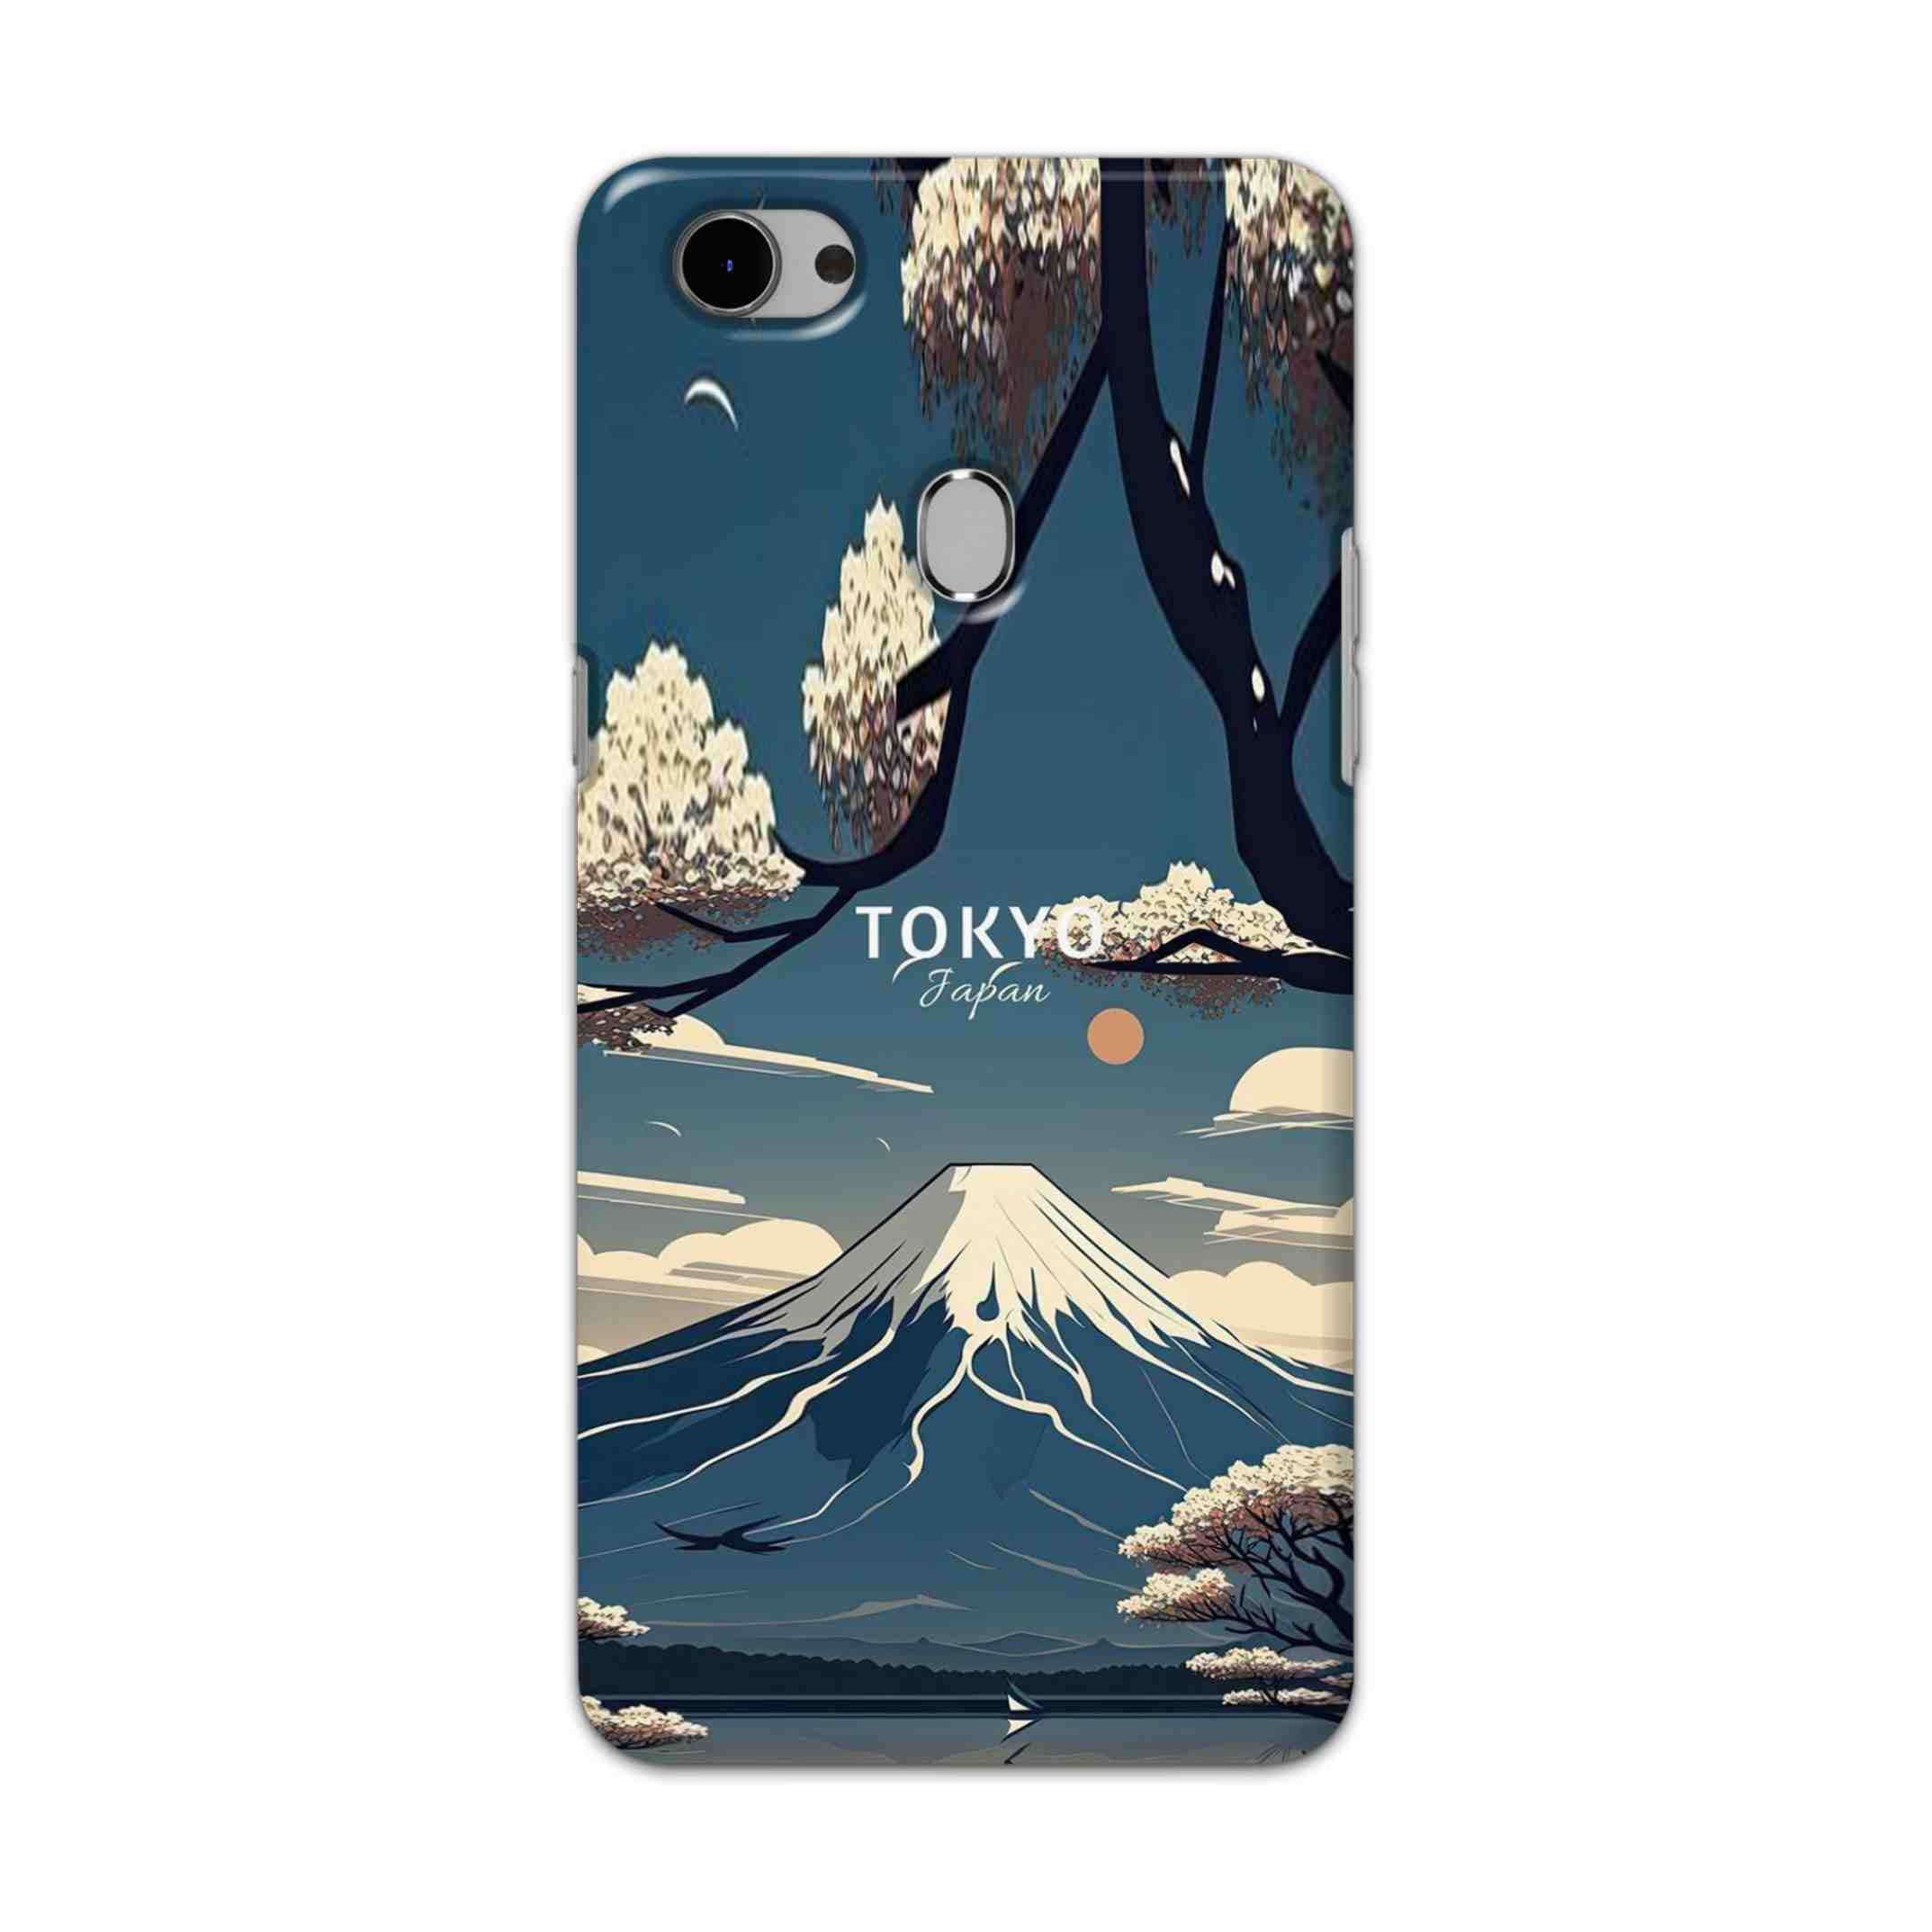 Buy Tokyo Hard Back Mobile Phone Case Cover For Oppo F7 Online